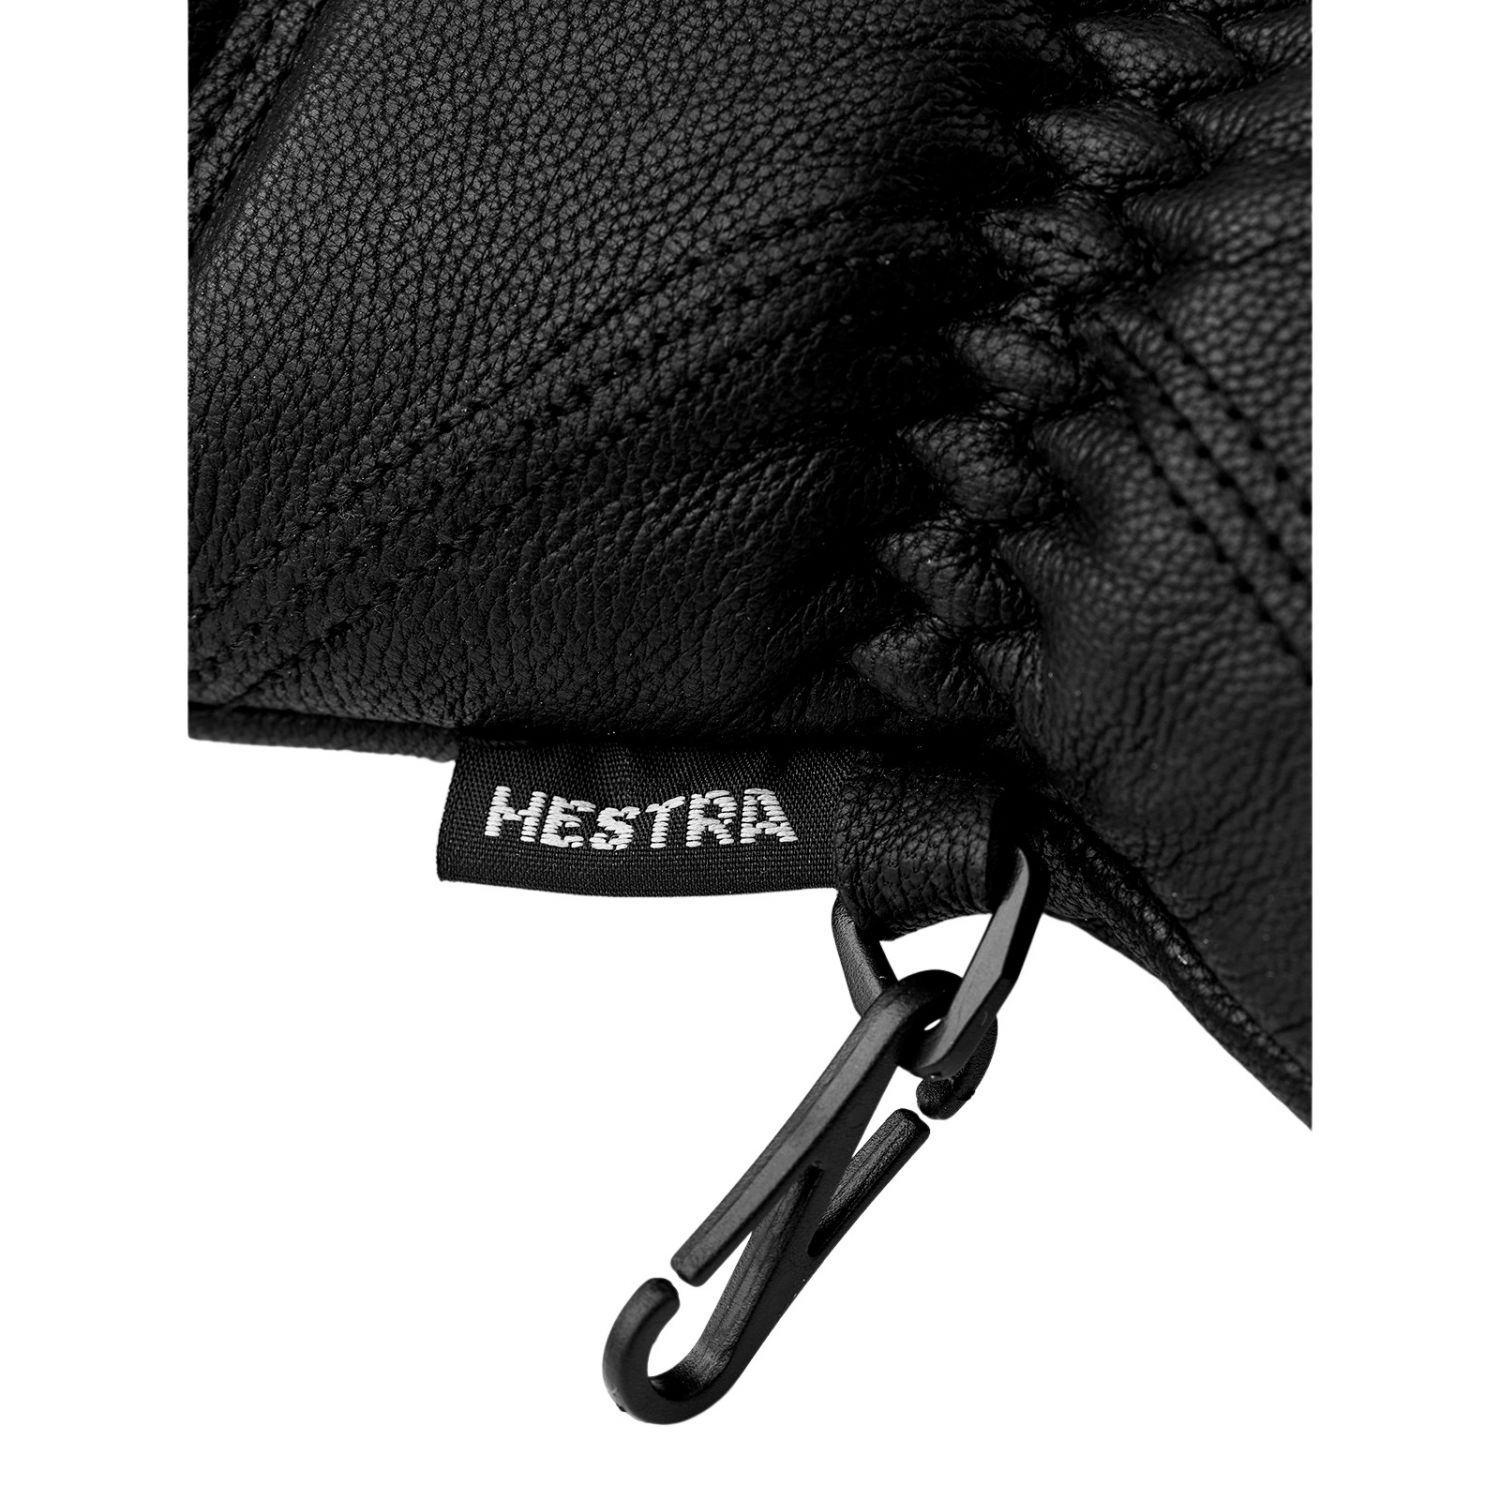 Hestra Leather Box, Votter, Black